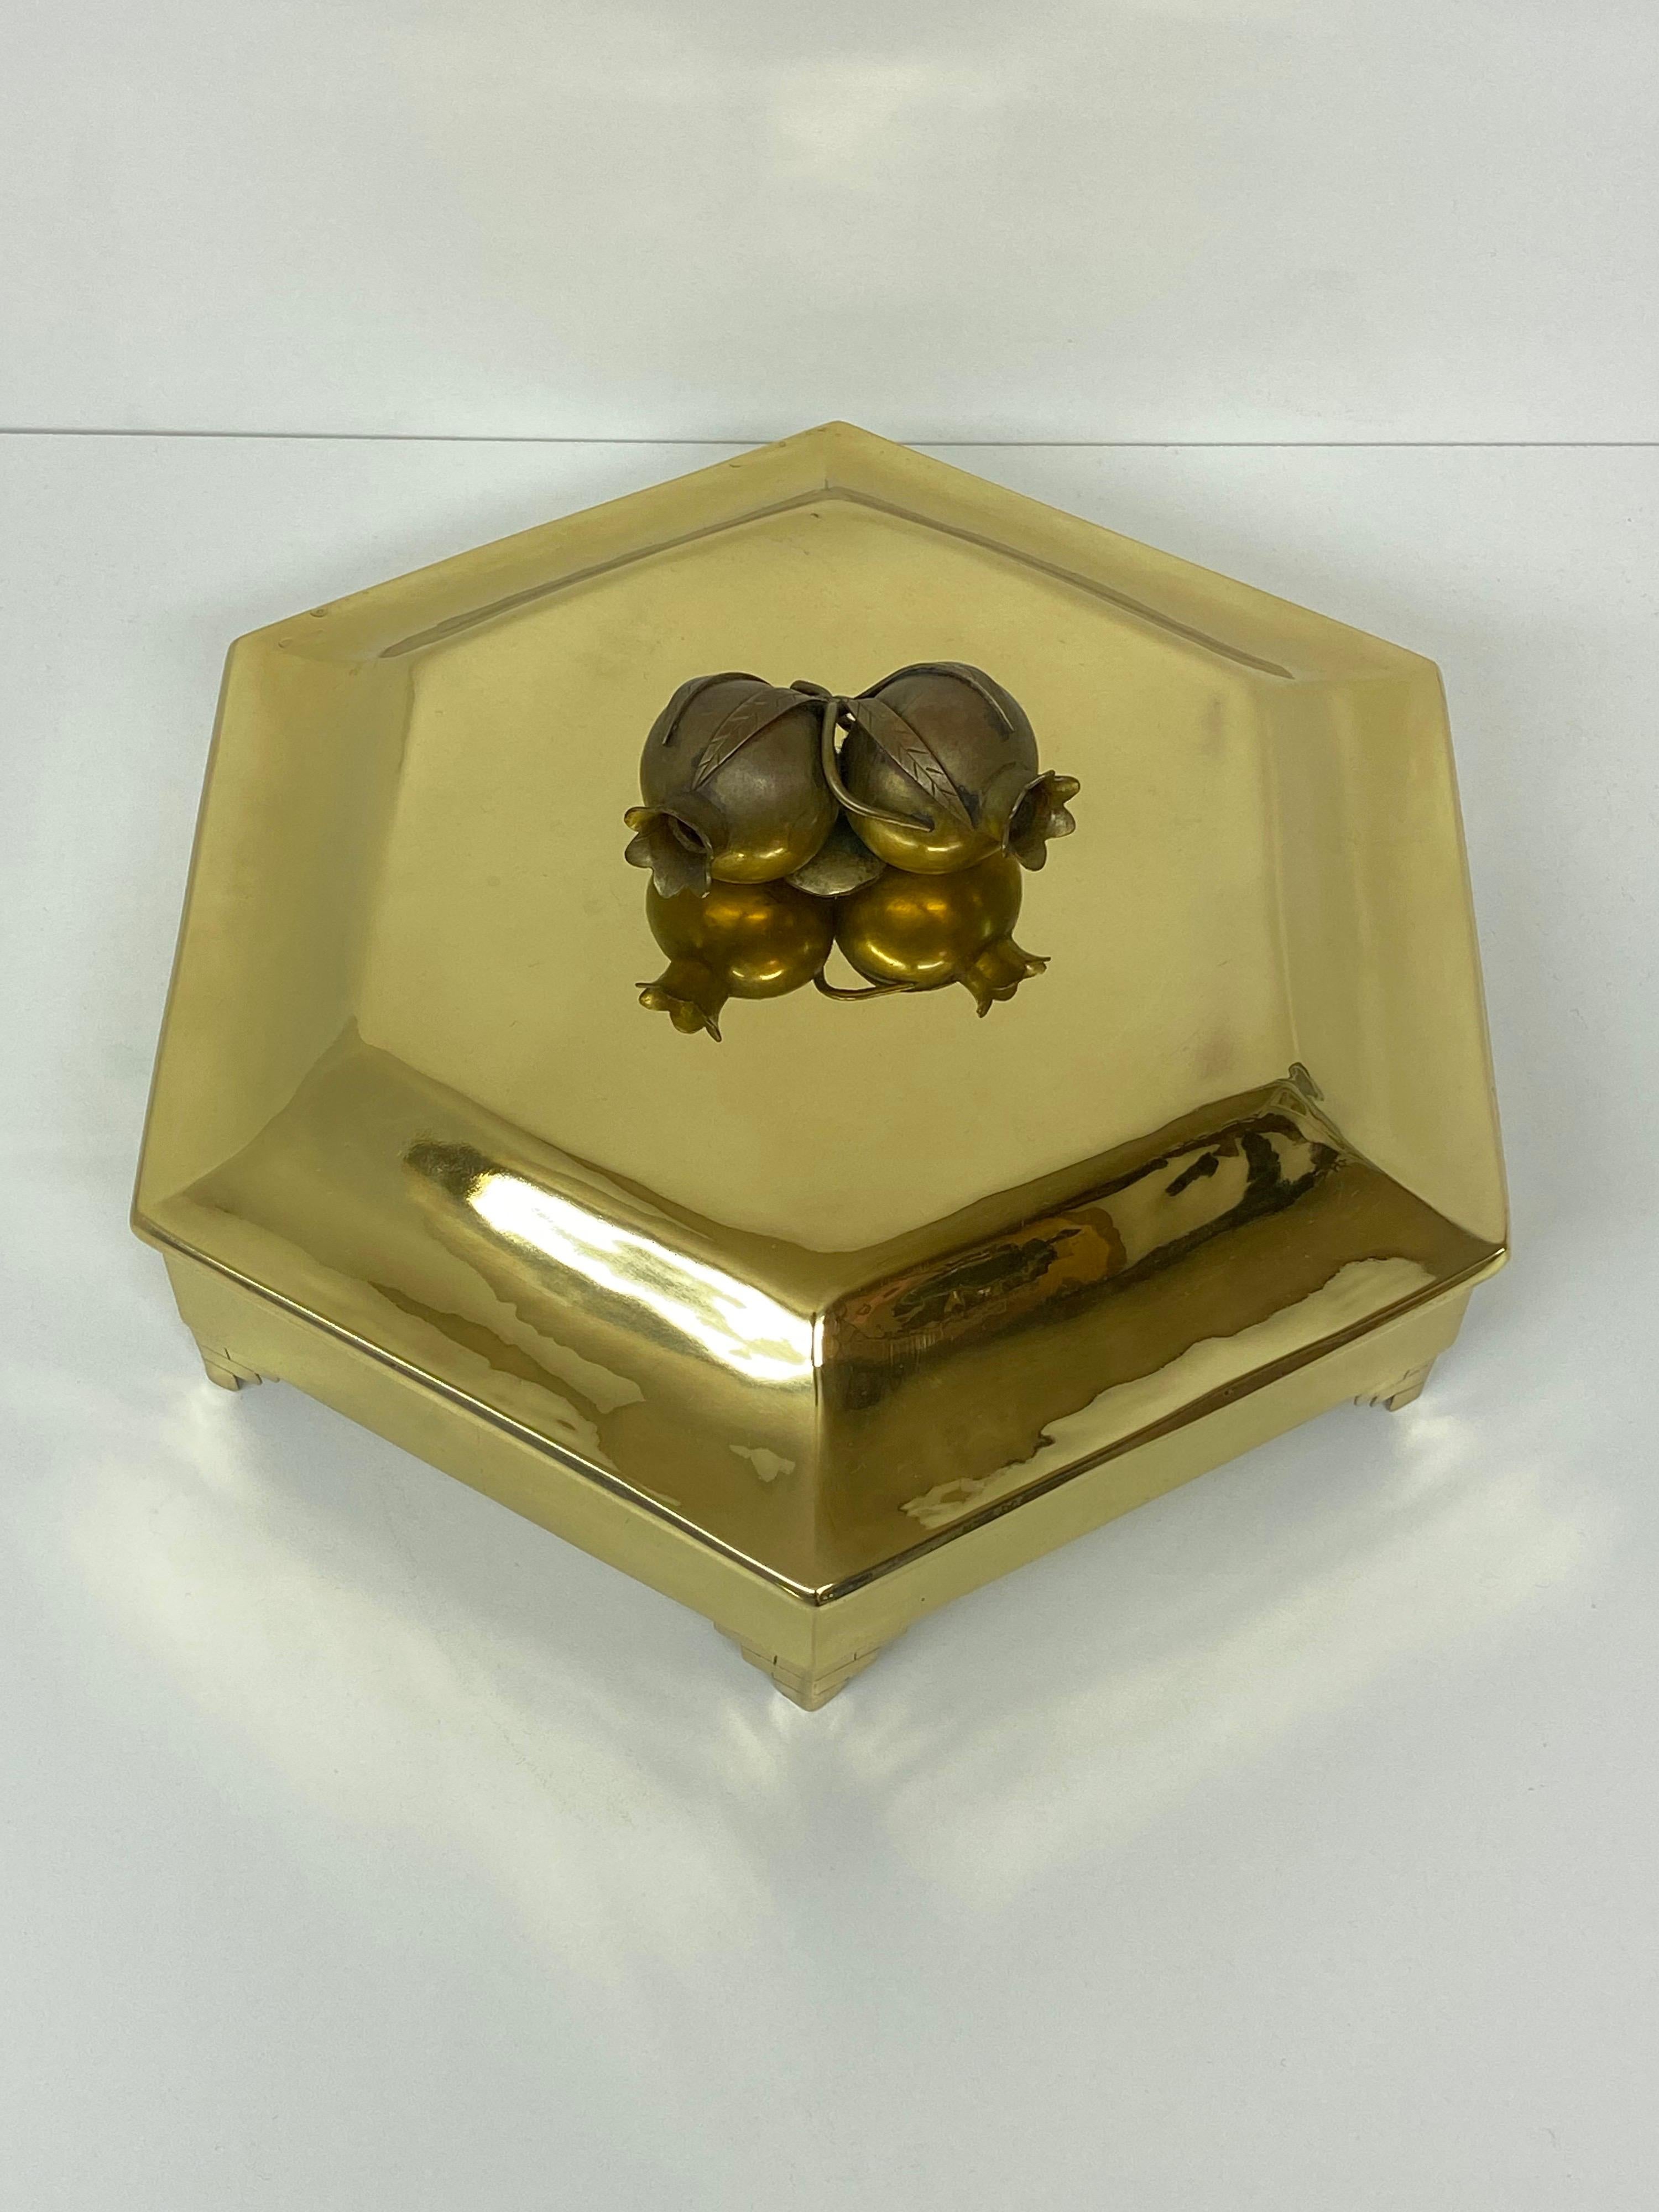 Brass jewelry box with pomegranate motif.